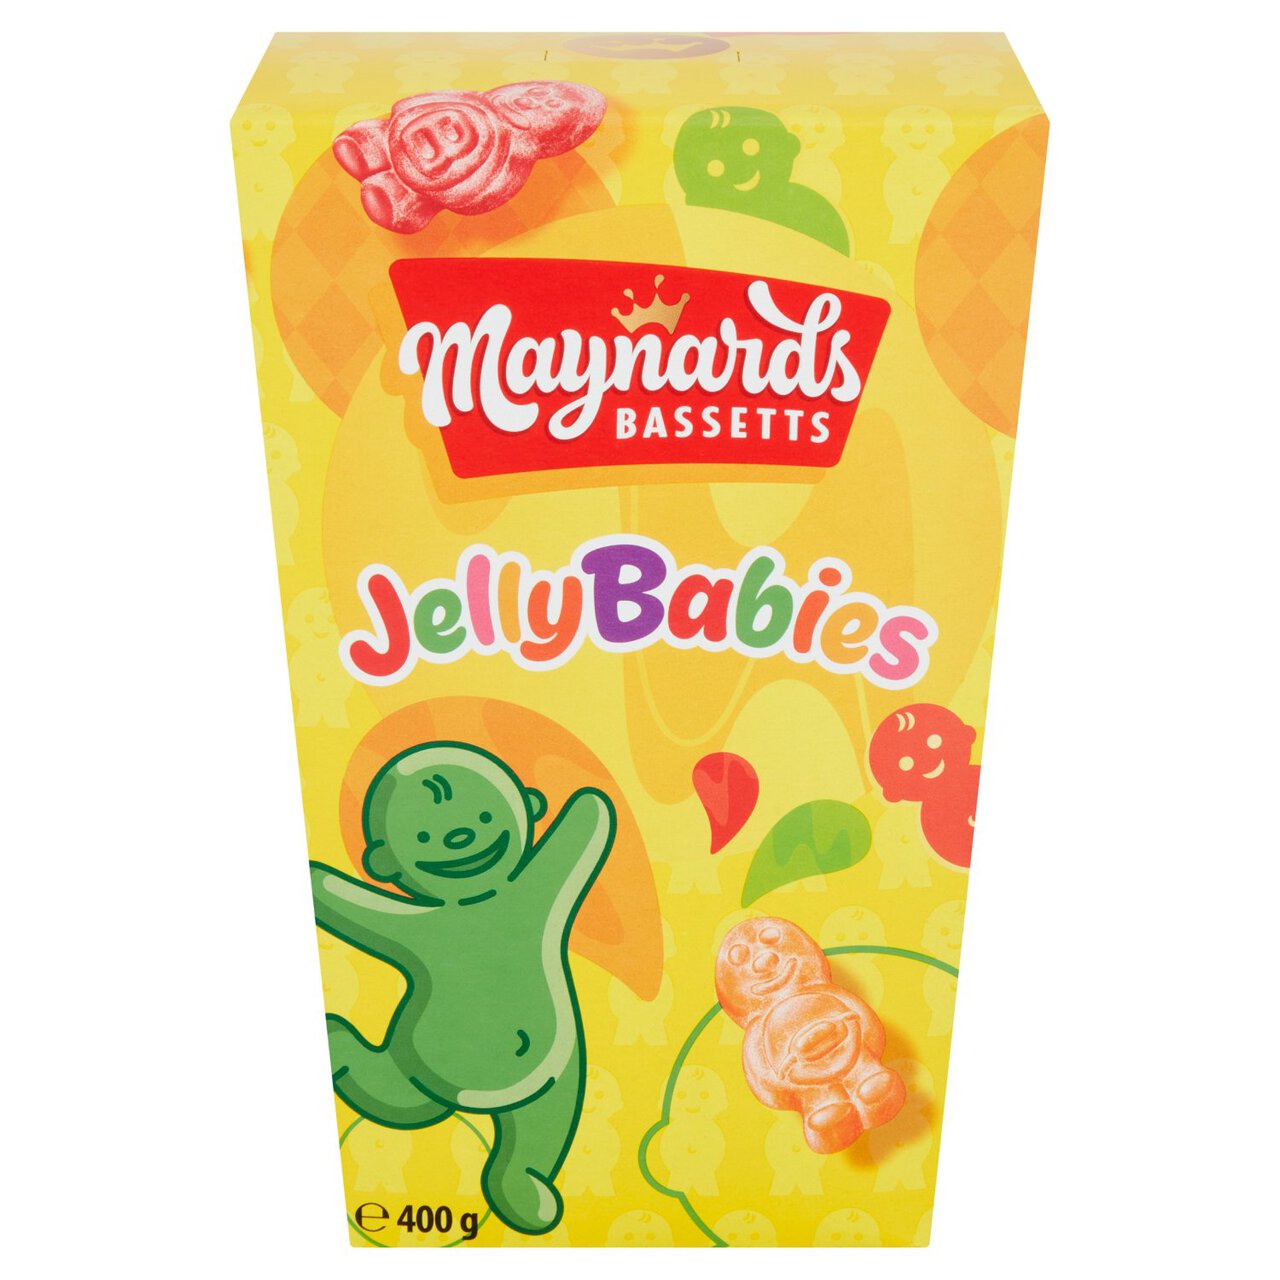 Maynards Bassetts Jelly Babies Carton 400g